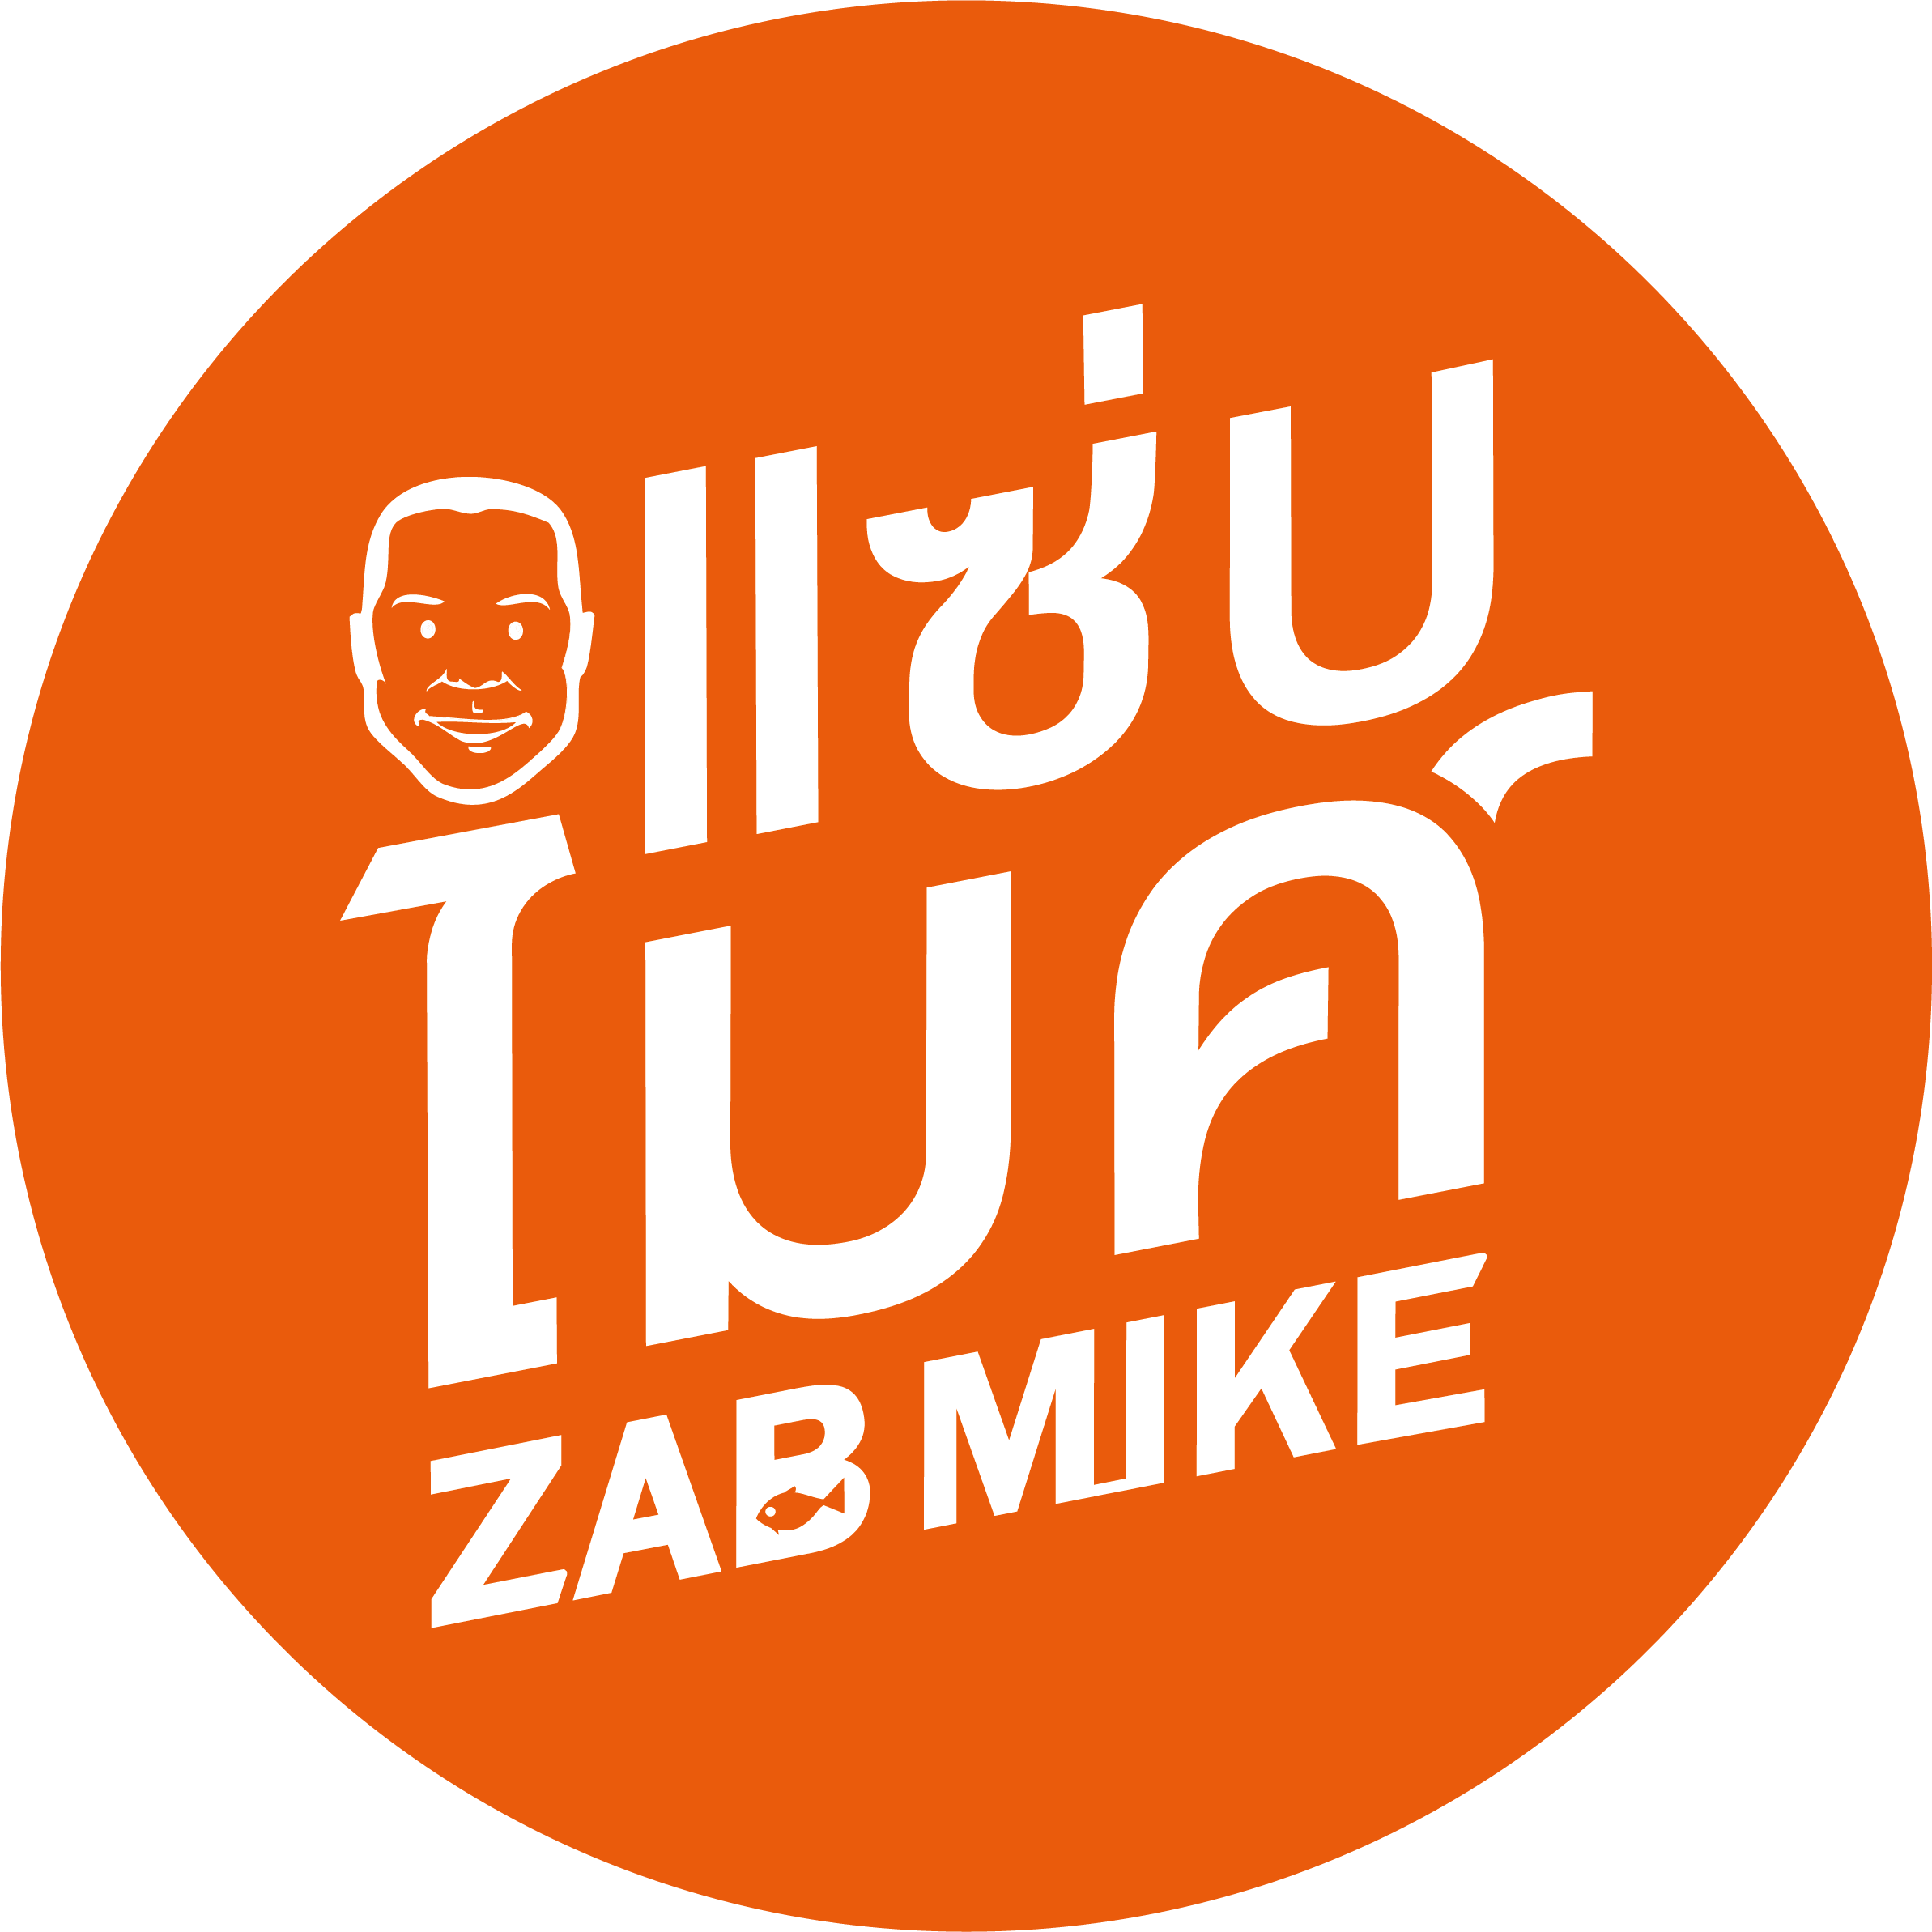 Zab Mike